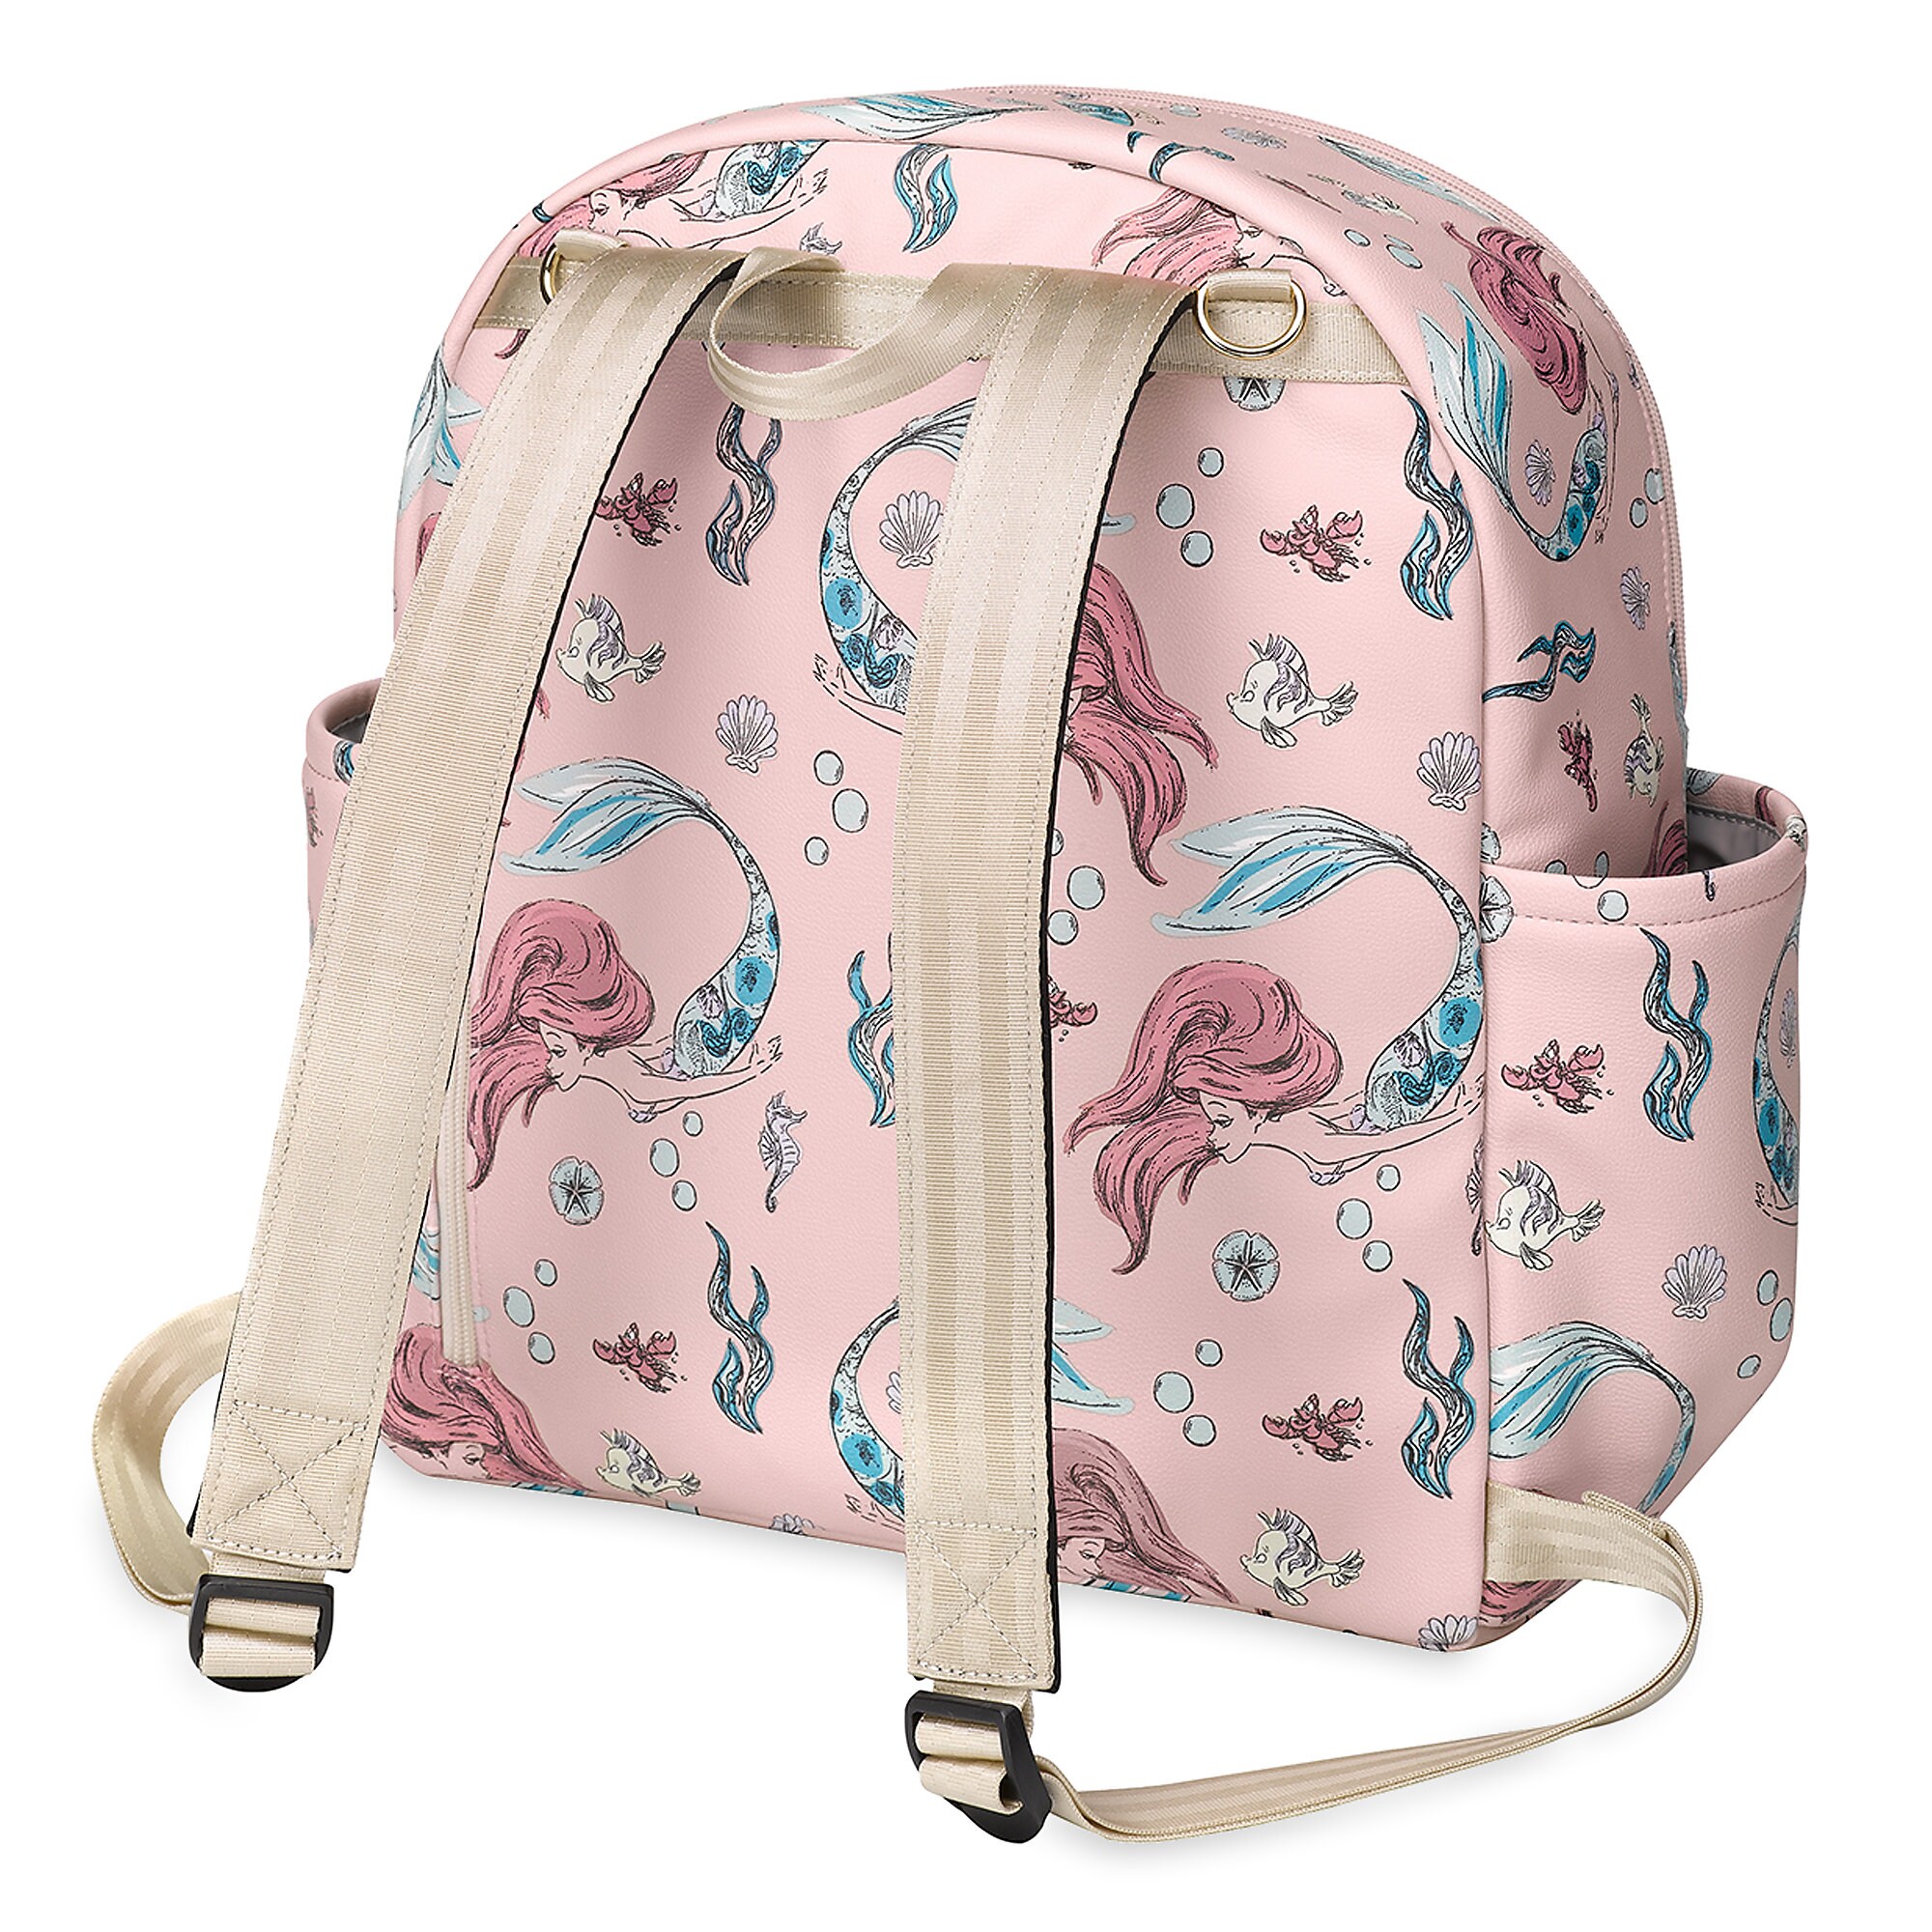 The Little Mermaid Diaper Bag Backpack by Petunia Pickle Bottom